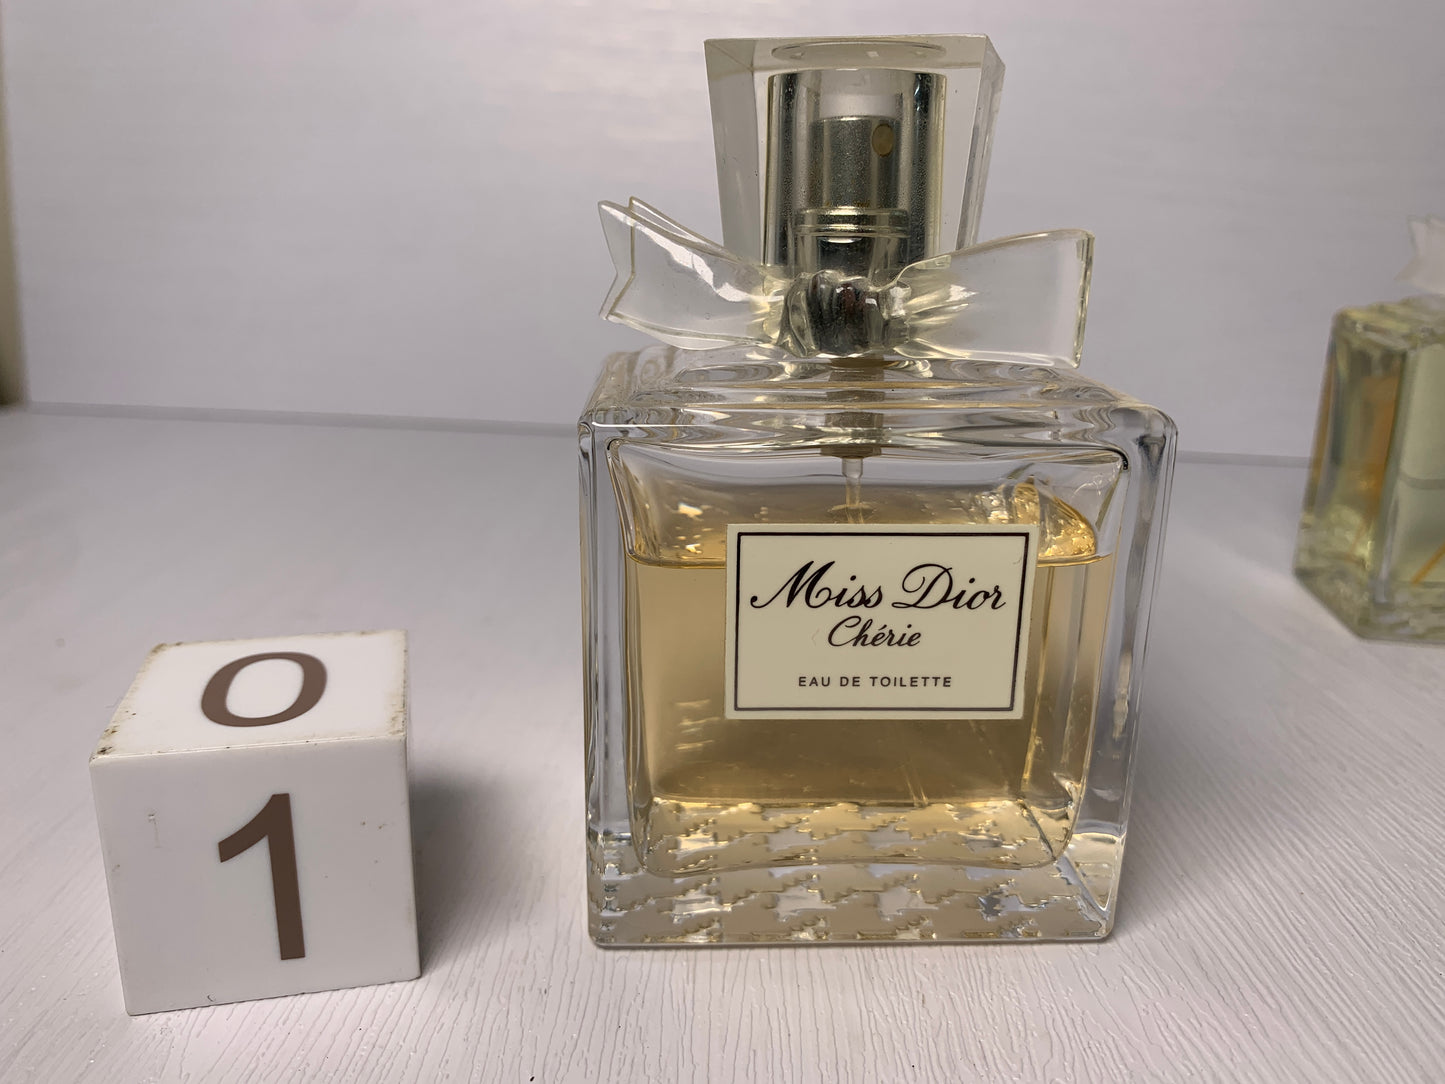 Rare Miss Dior Cherie  100ml 3.4 oz 50ml EDT eau de toilette  Parfum Perfume - 6FEB22